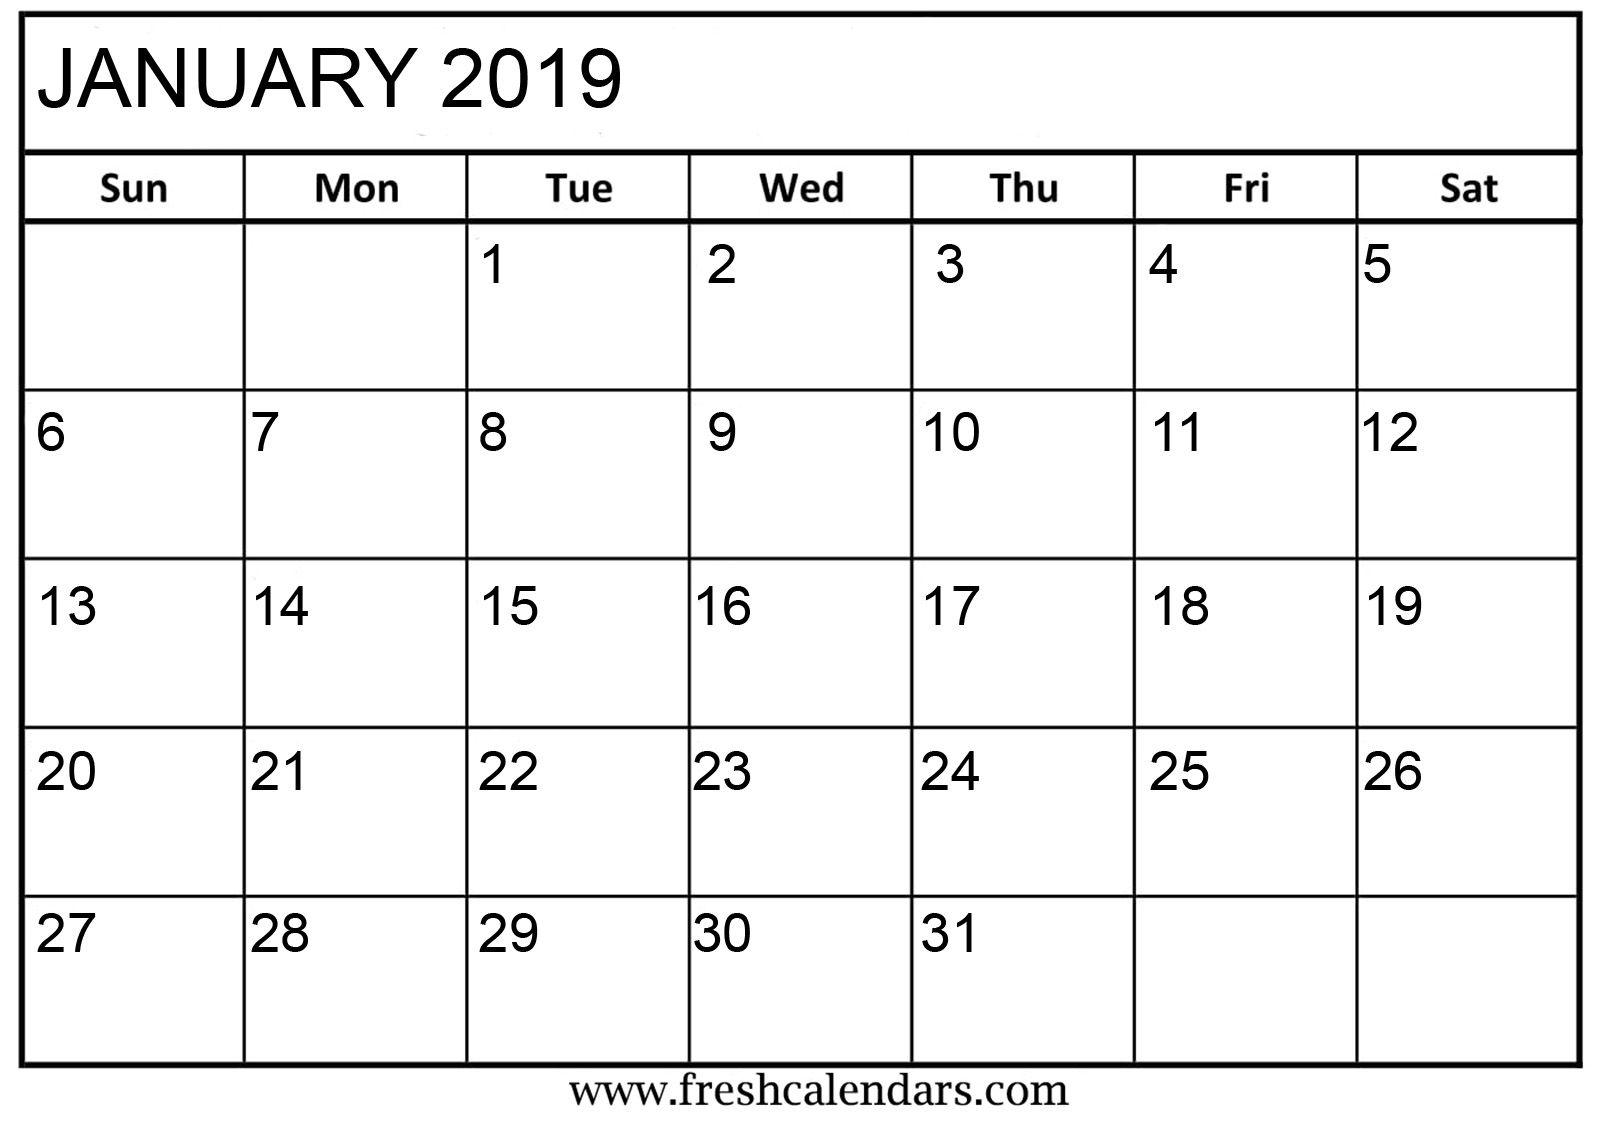 January Calendar January 2019 Calendar